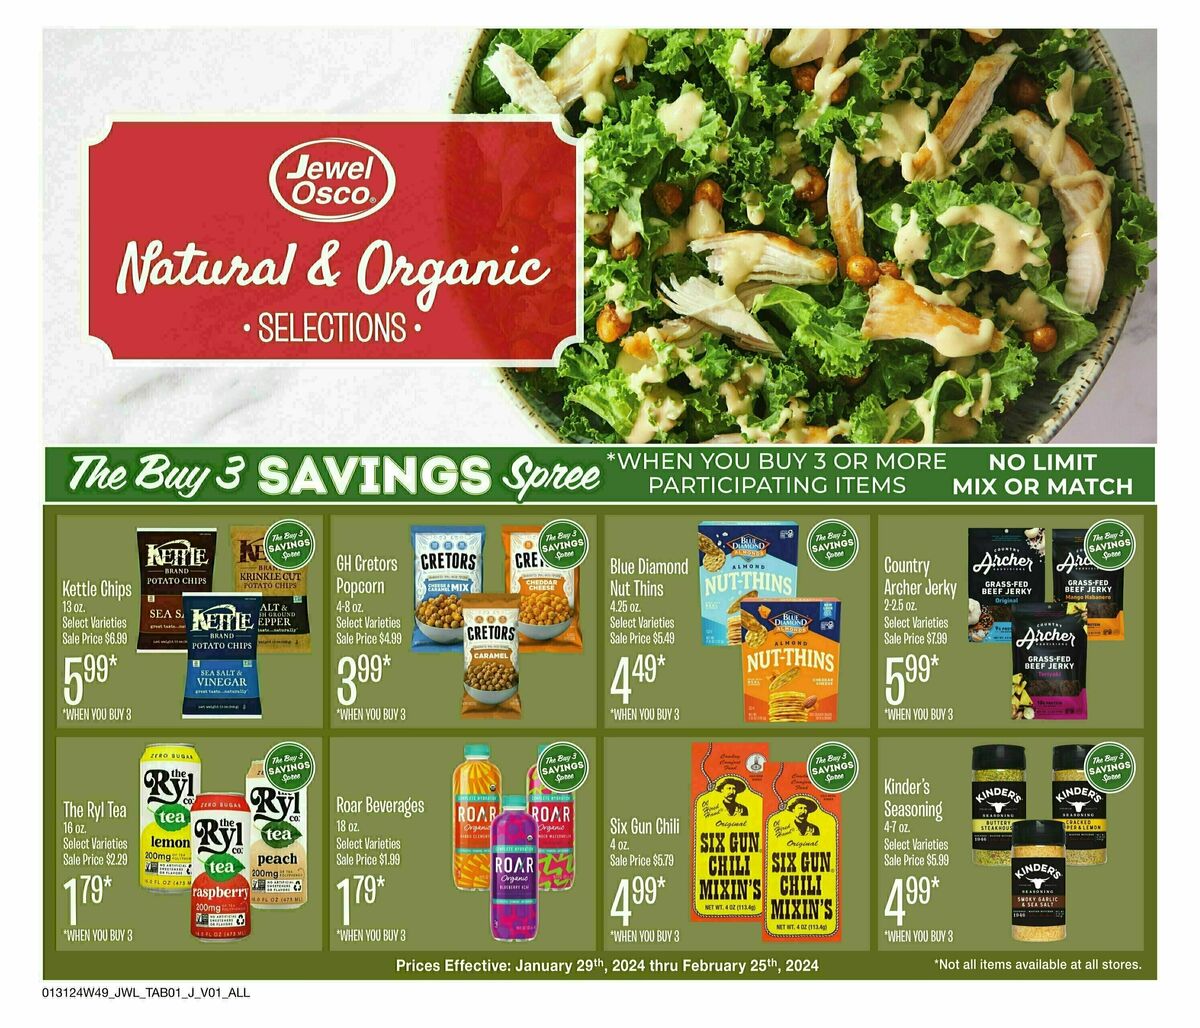 Jewel Osco Natural & Organics Weekly Ad from January 29